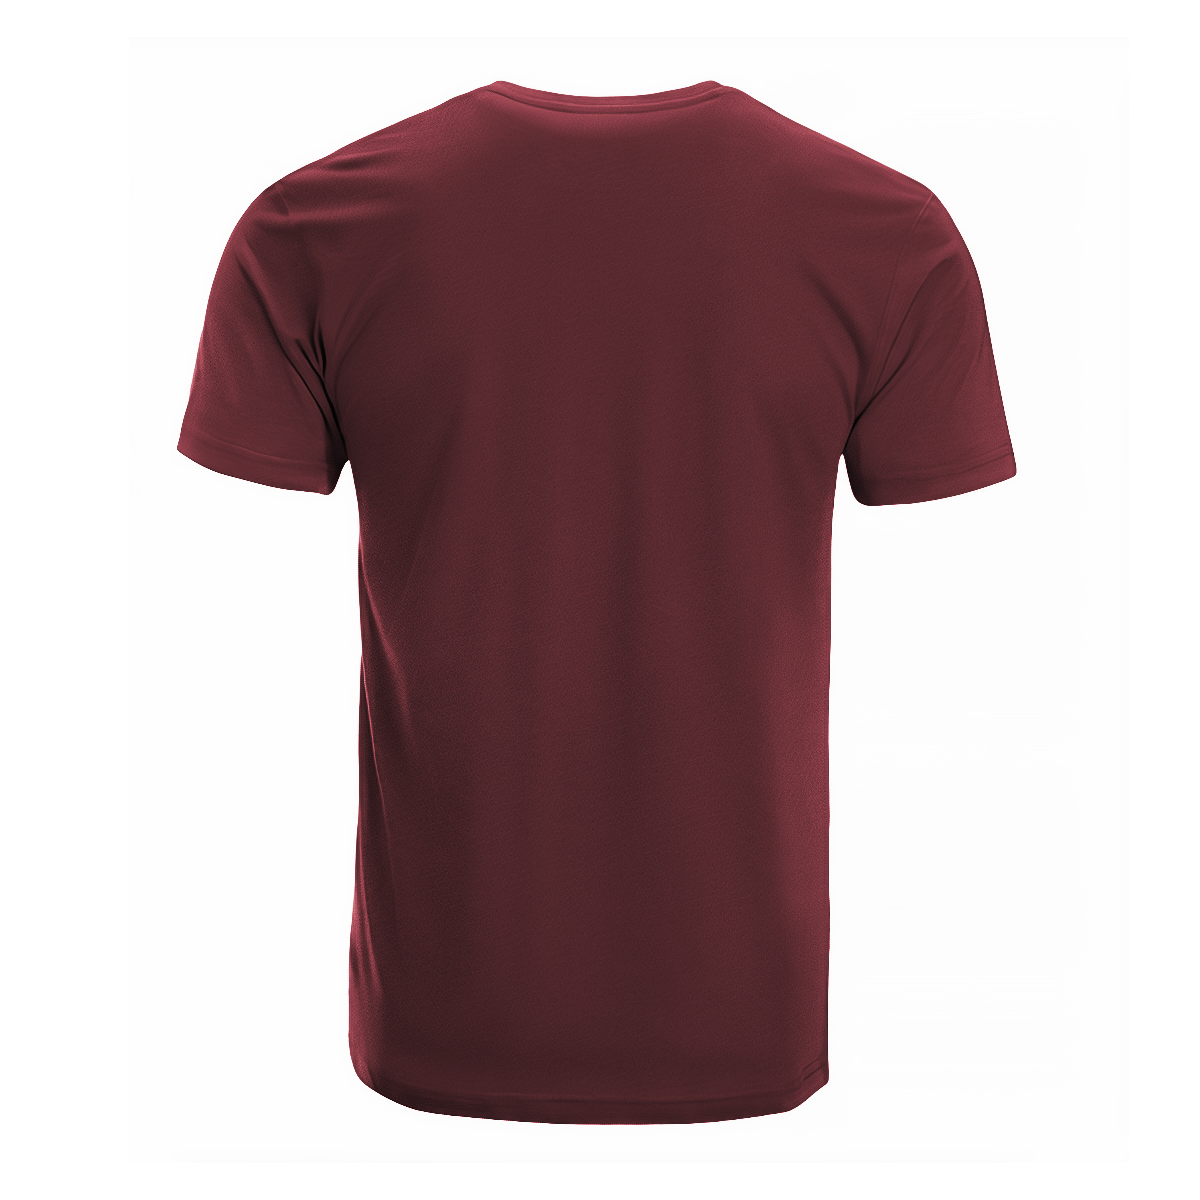 Mar Tartan Crest T-shirt - I'm not yelling style